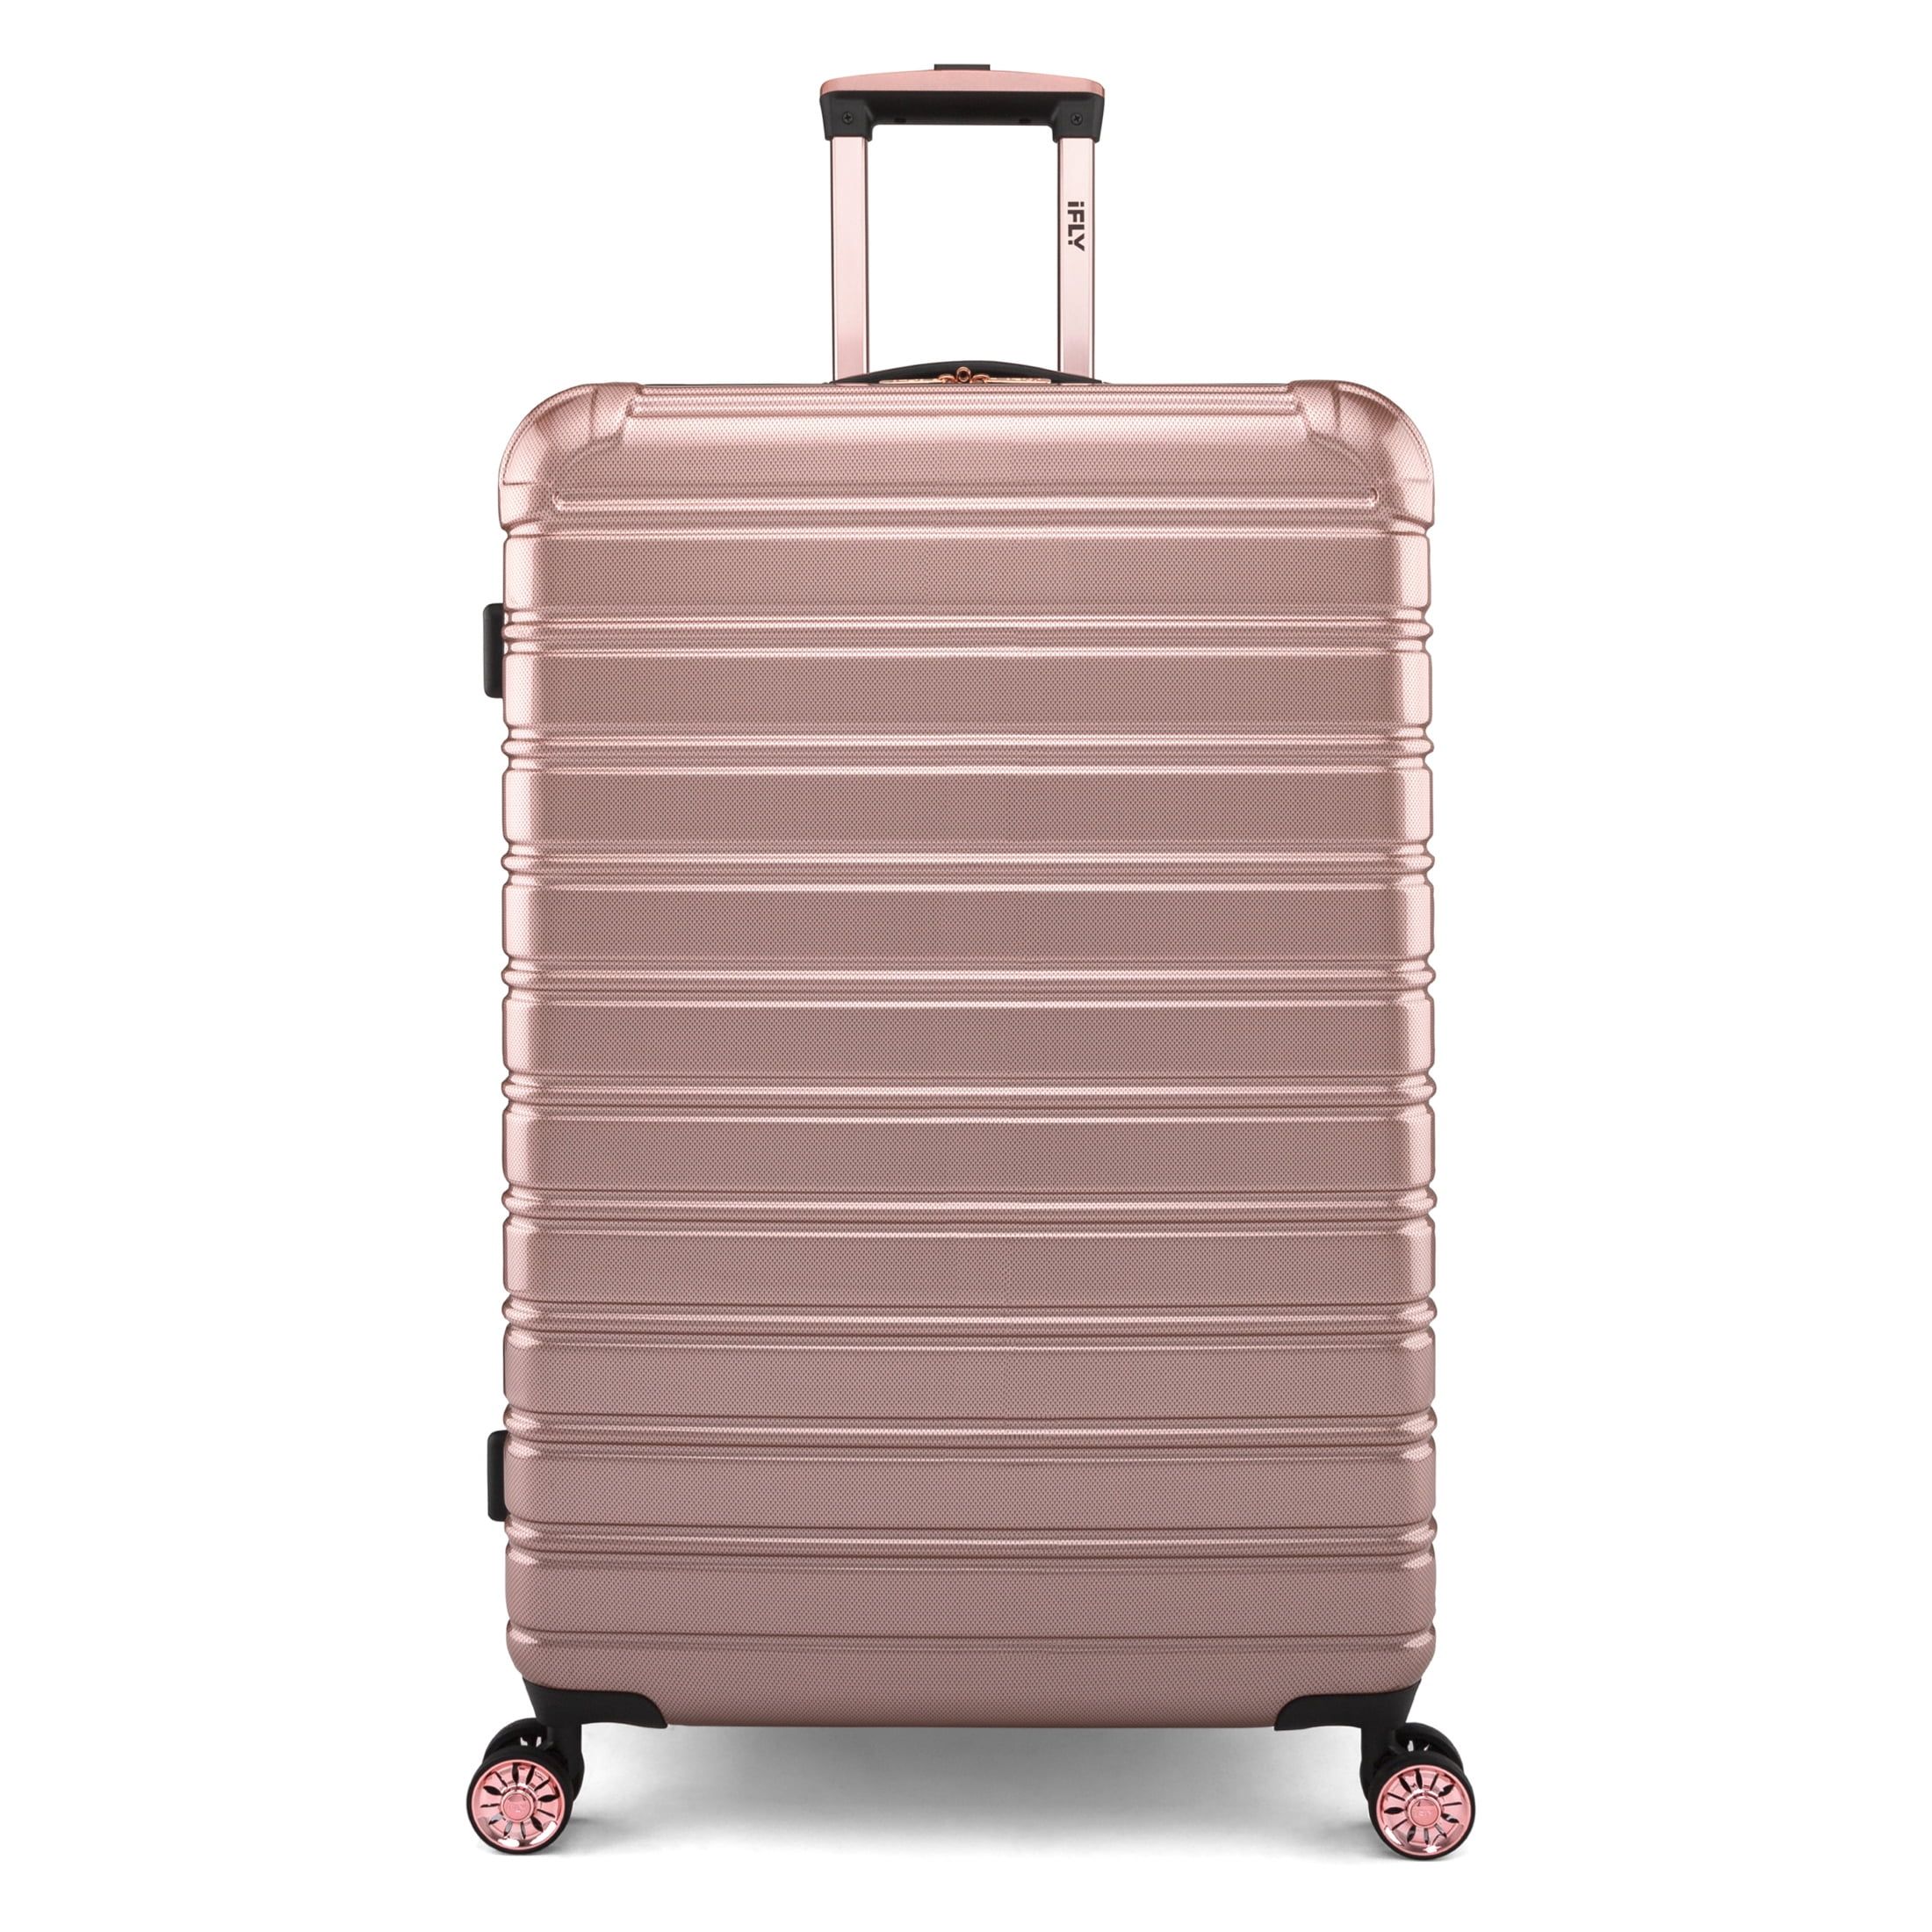 iFLY Hard Sided Fibertech 28" Checked Luggage, Rose Gold Luggage | Walmart (US)